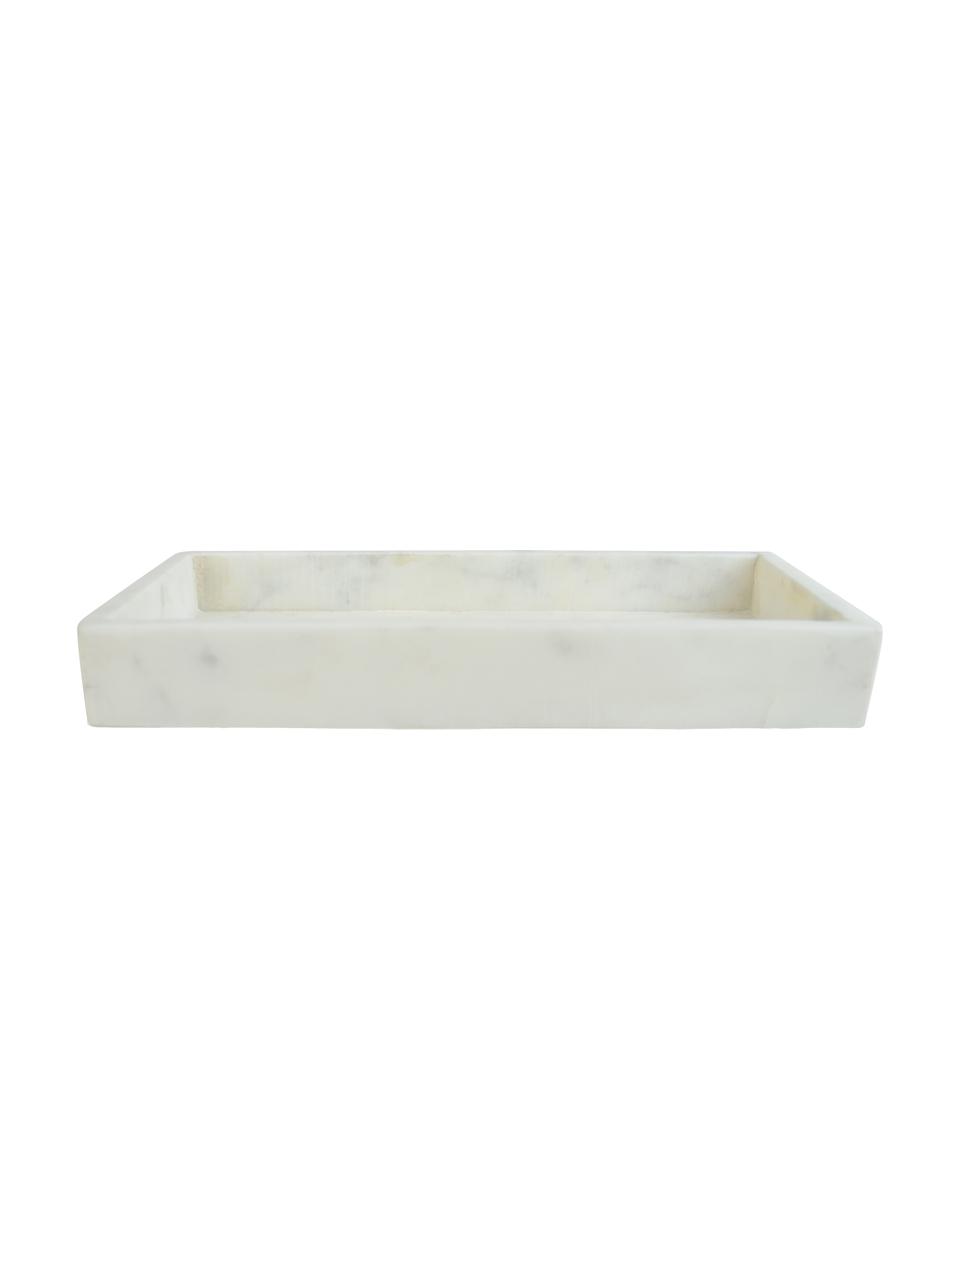 Deko-Marmor-Tablett Mera, Marmor, Weiss, marmoriert, B 30 x T 15 cm